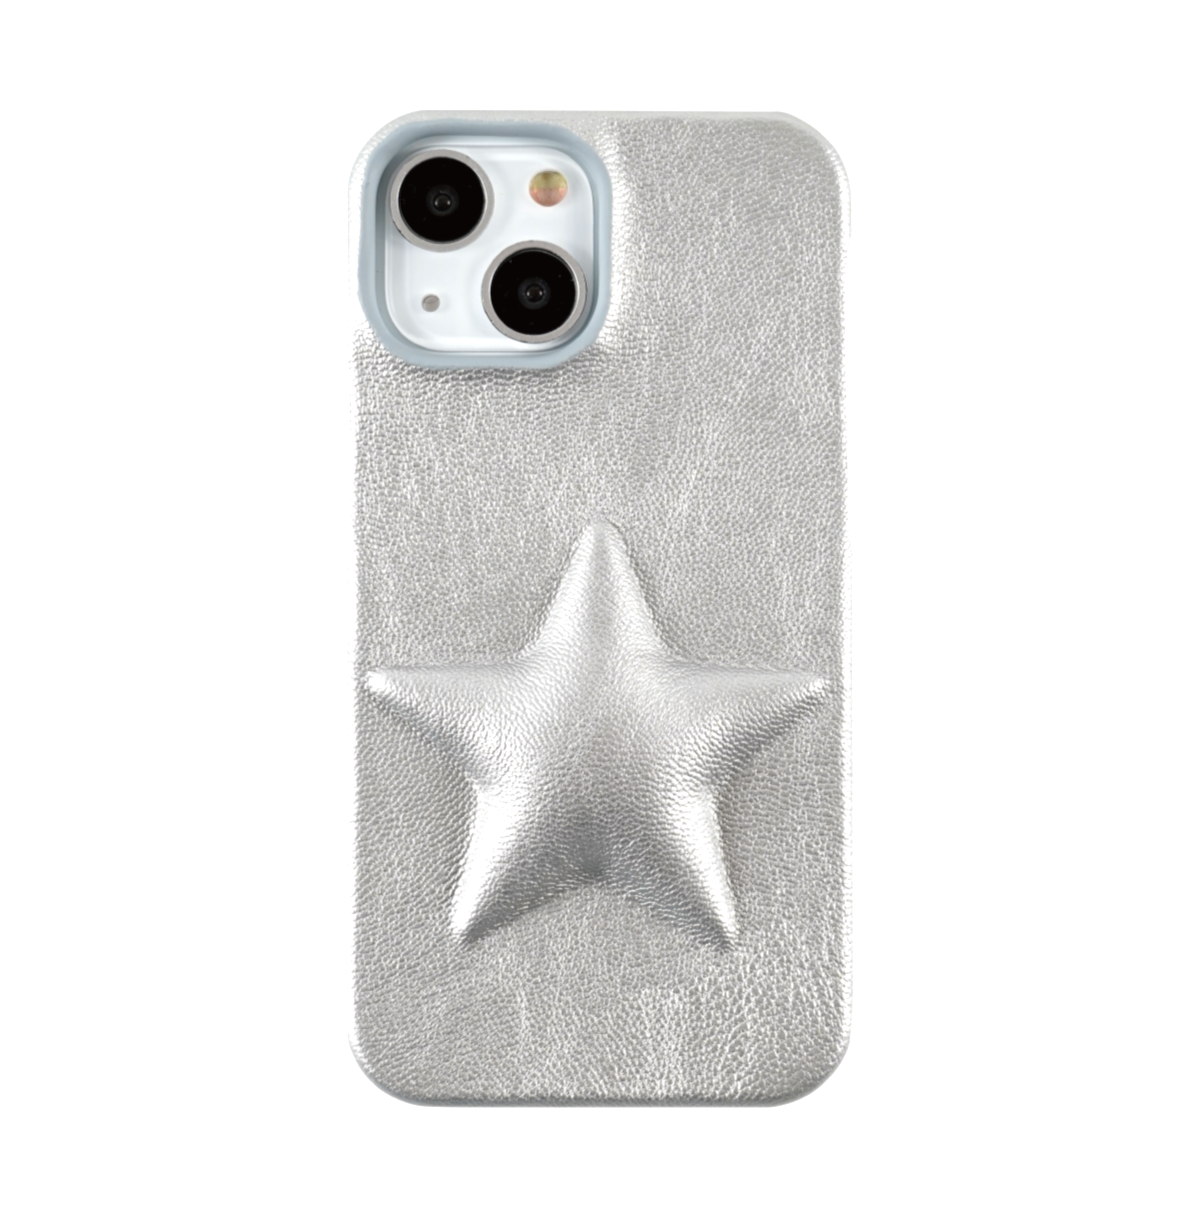 Star cushion case (silver)